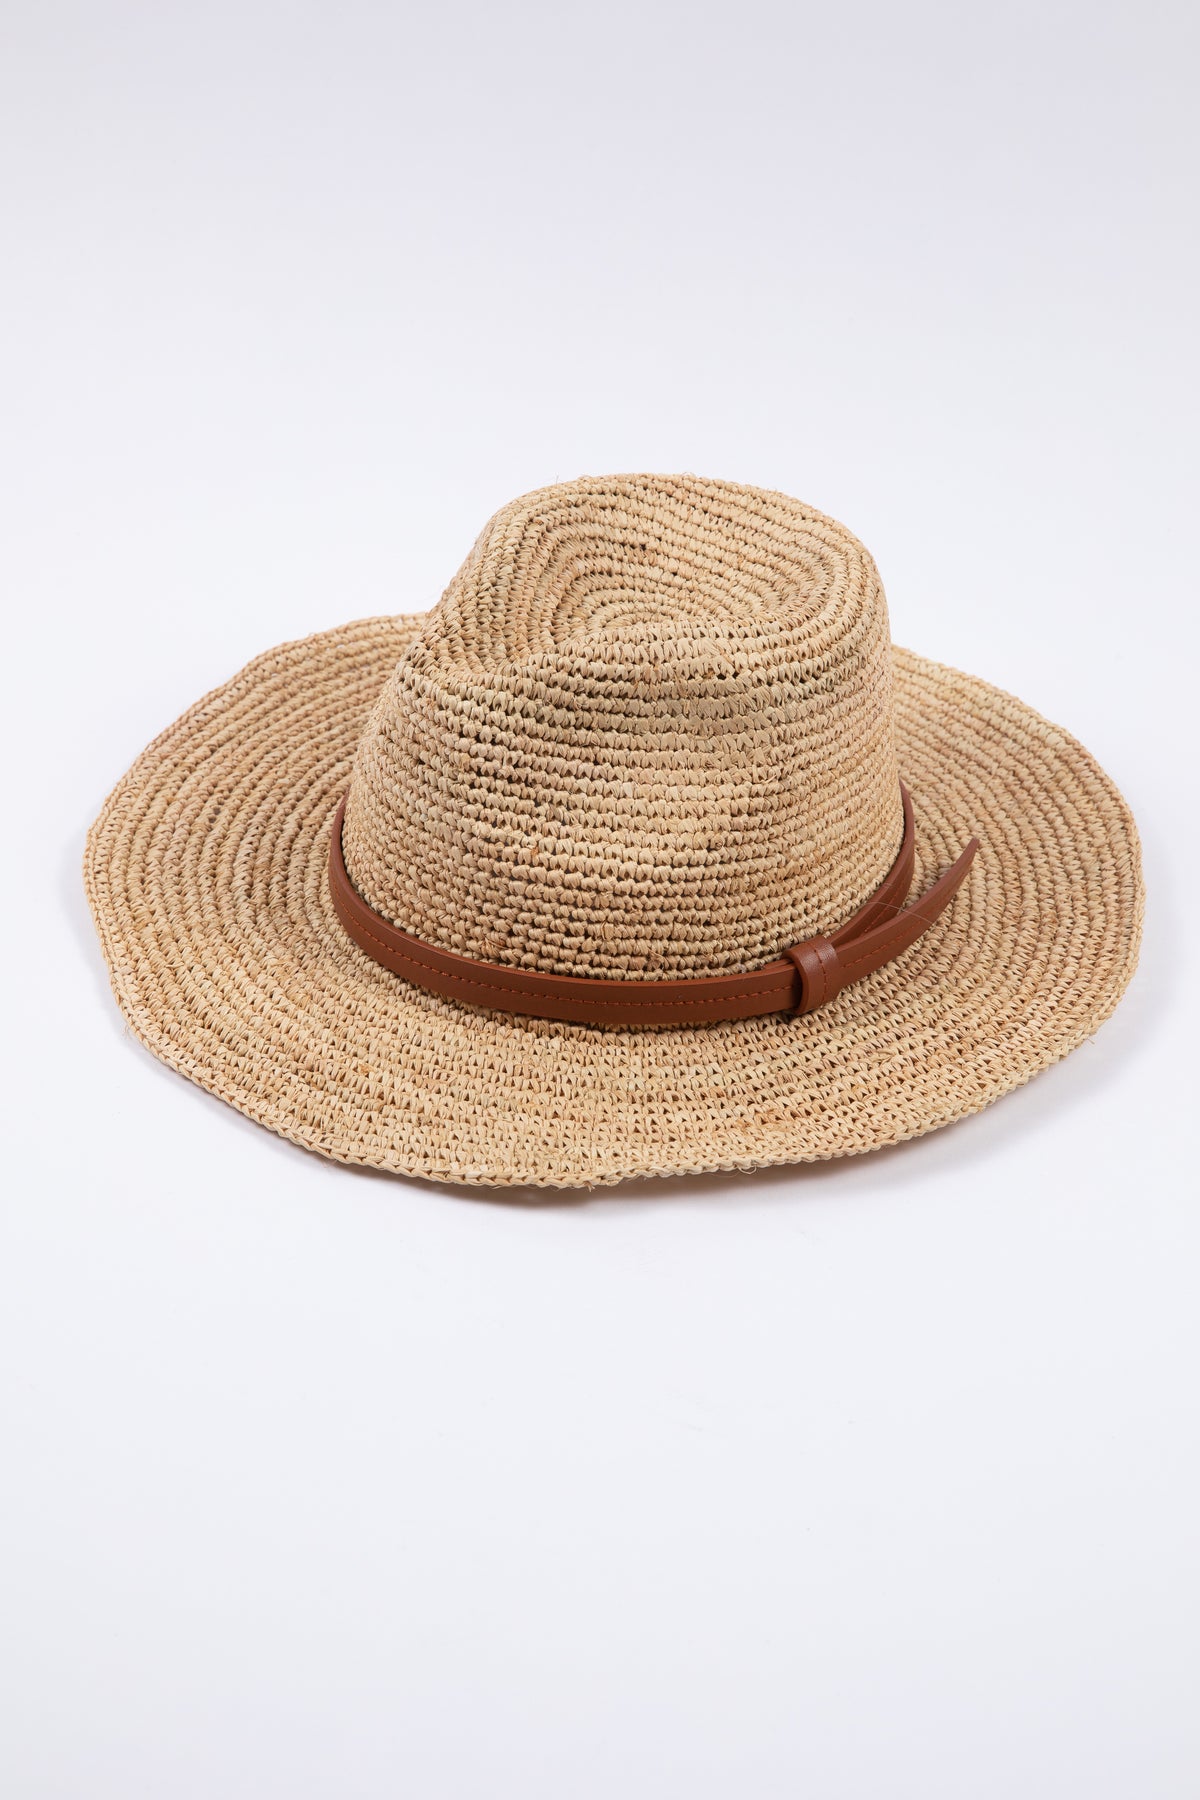 Holiday Trading Co. | Mentana Hat (Ecru or Tan Strap)